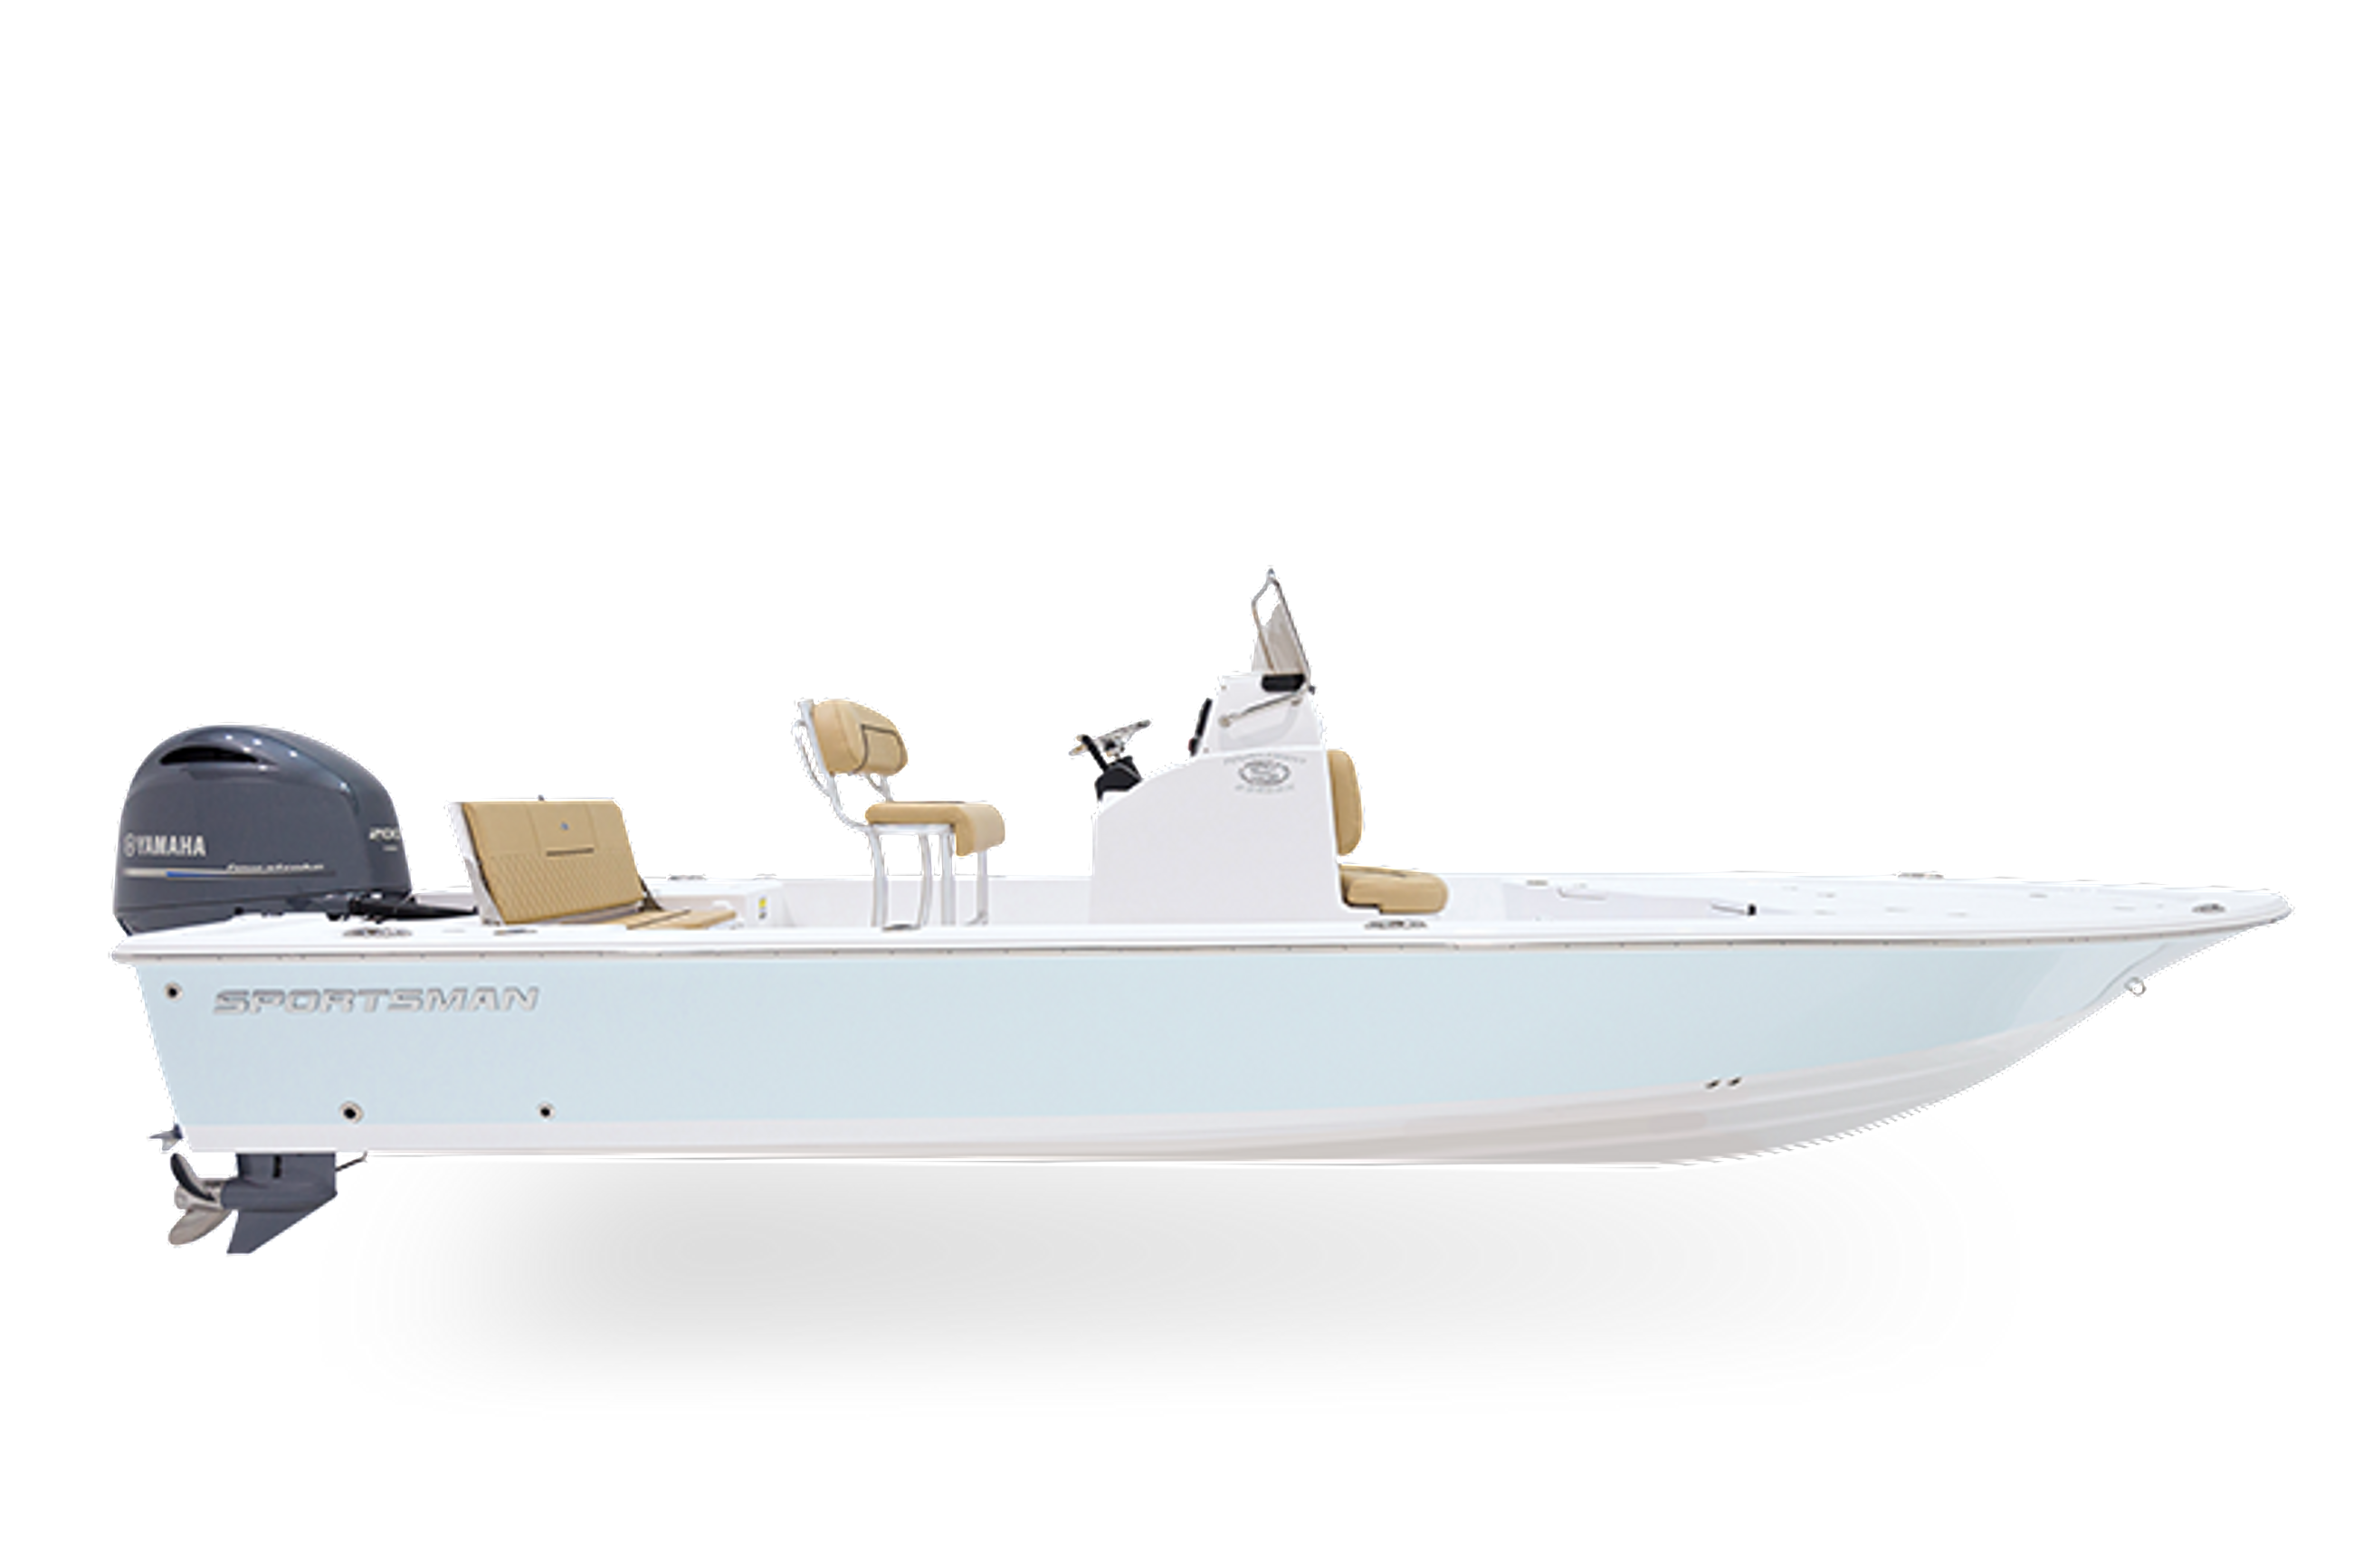 Studio image for Tournament 234 SBX Bay Boat